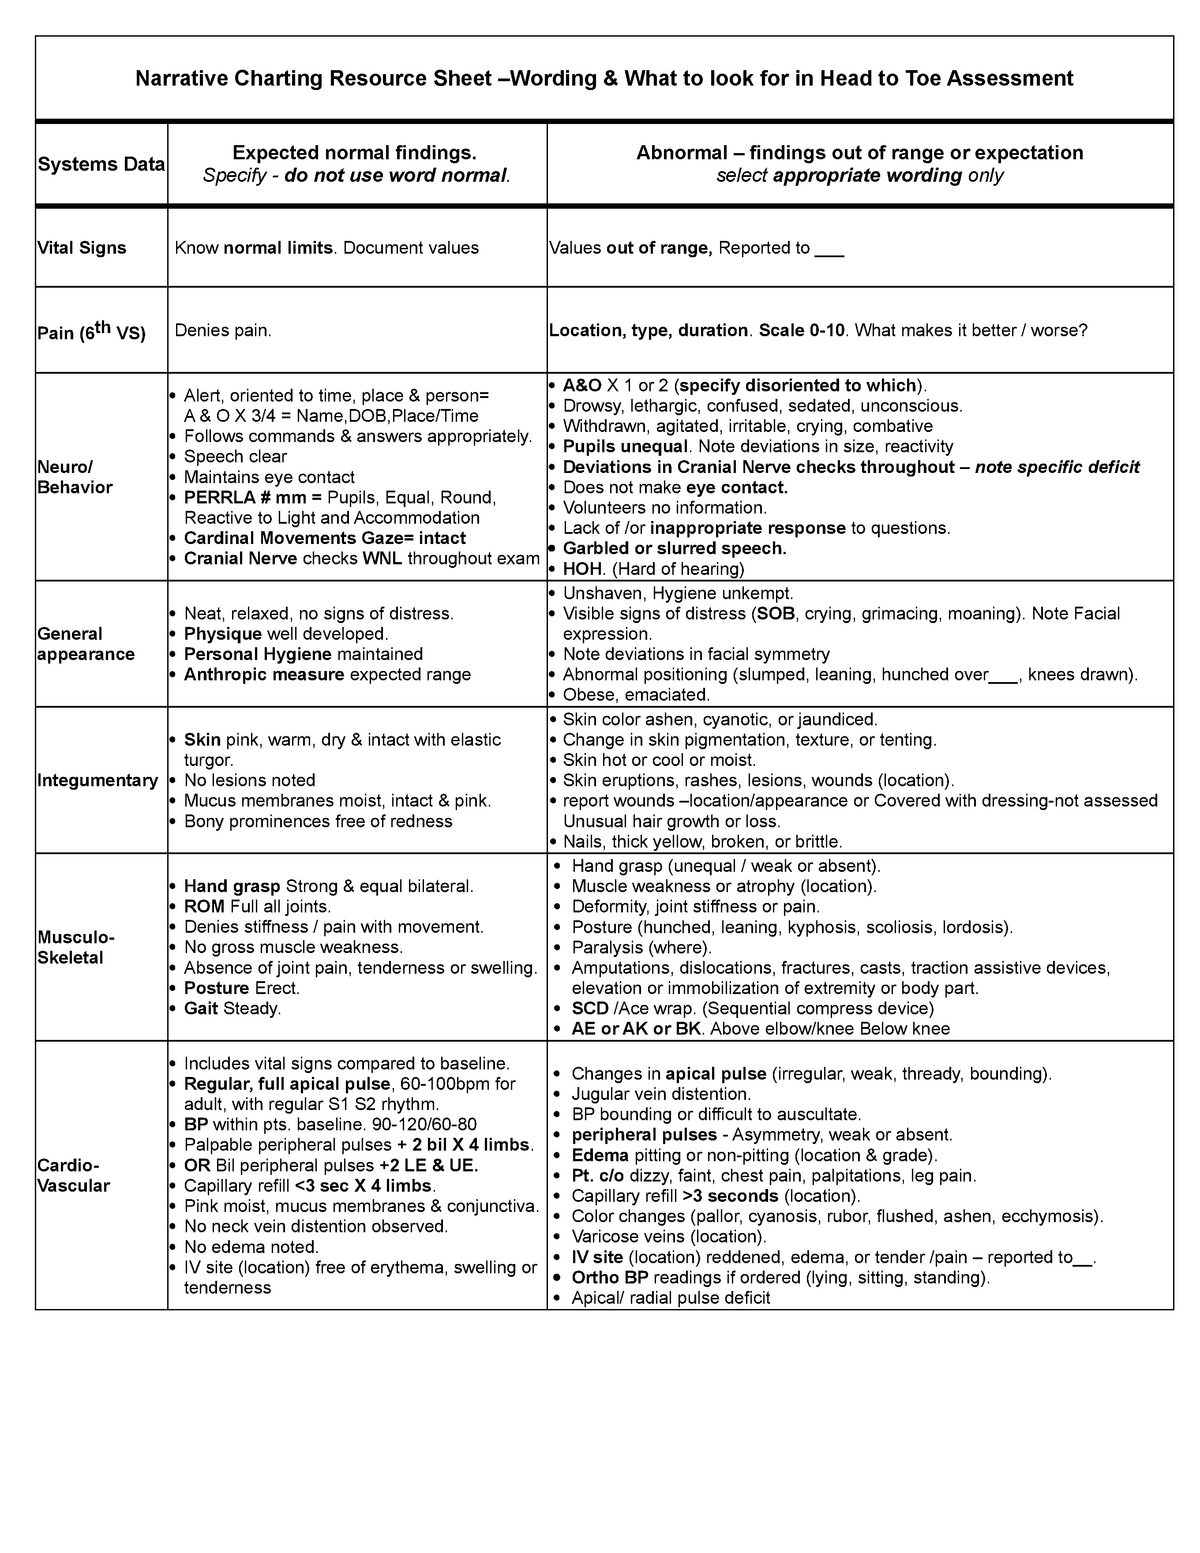 head-to-toe-chart-assessment-narrative-charting-resource-sheet